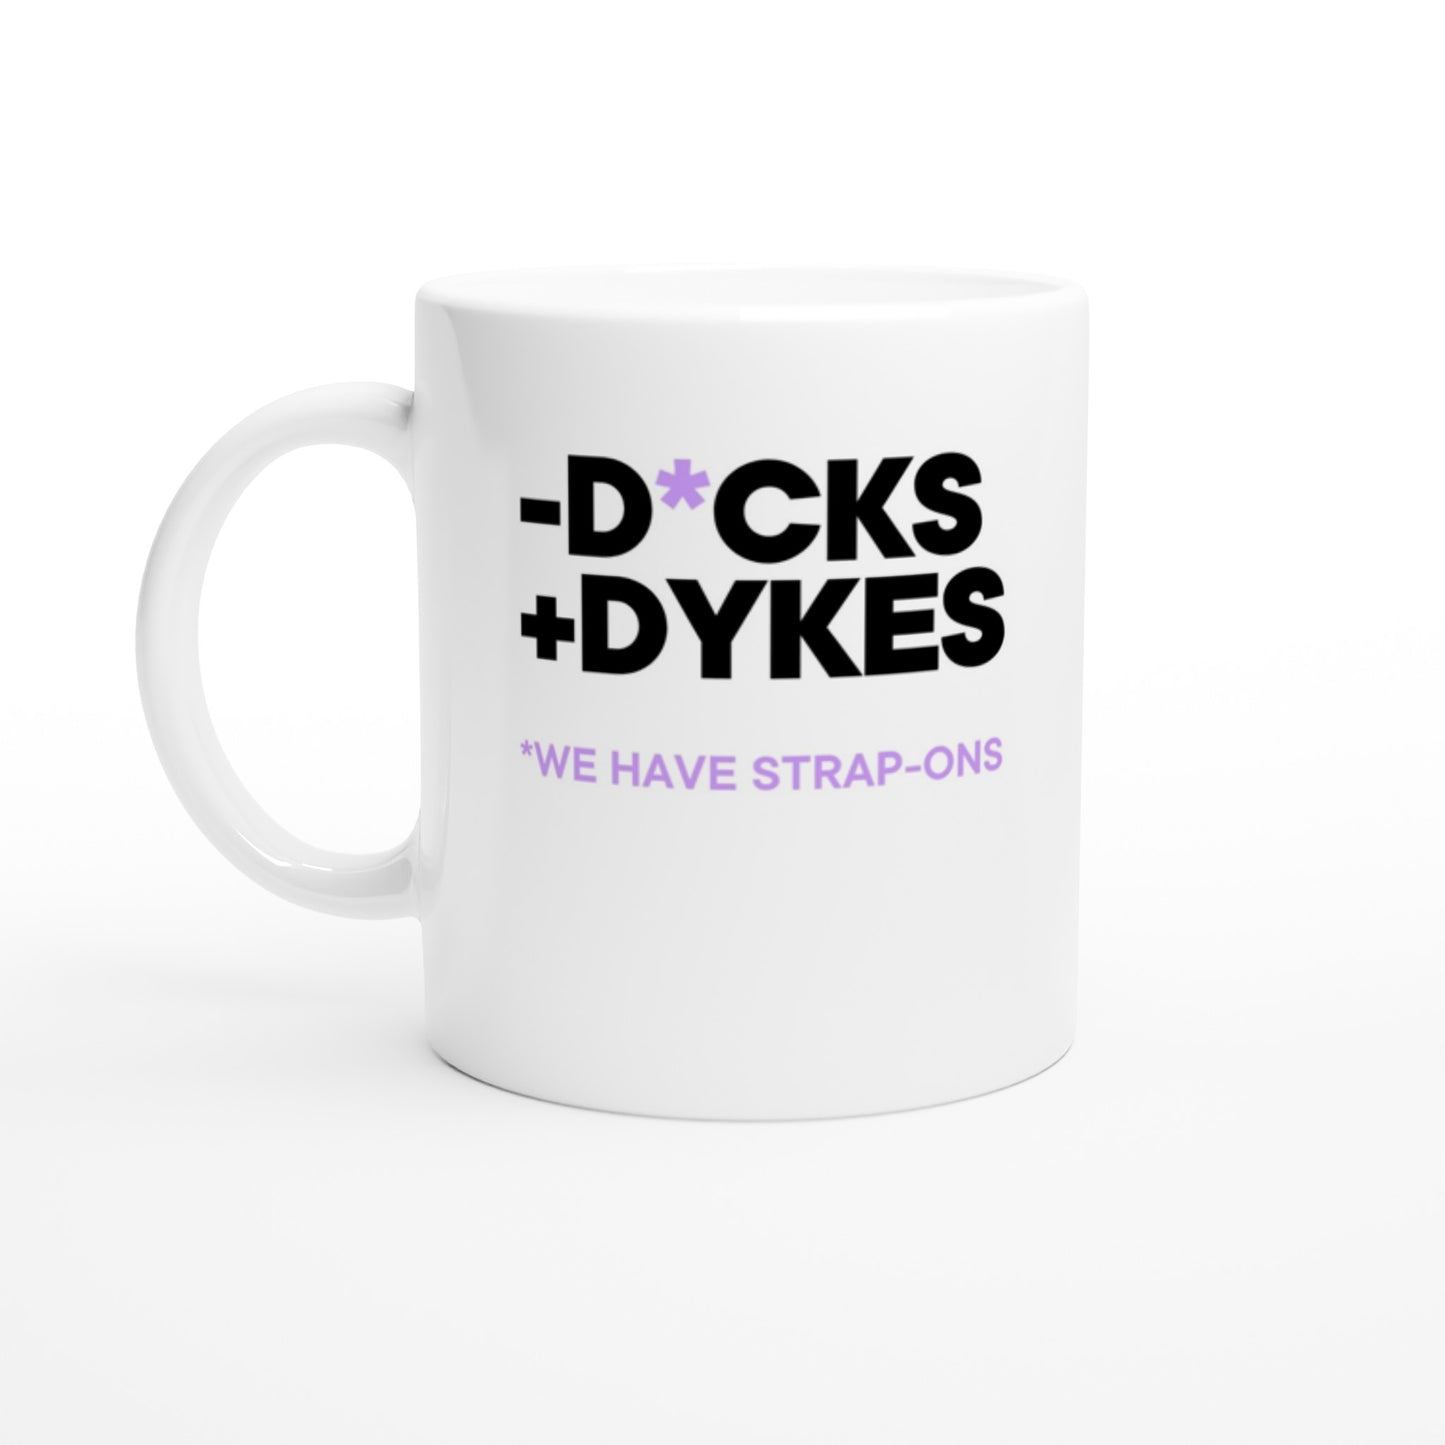 Tazza in ceramica bianca  / - D*cks + Dykes -